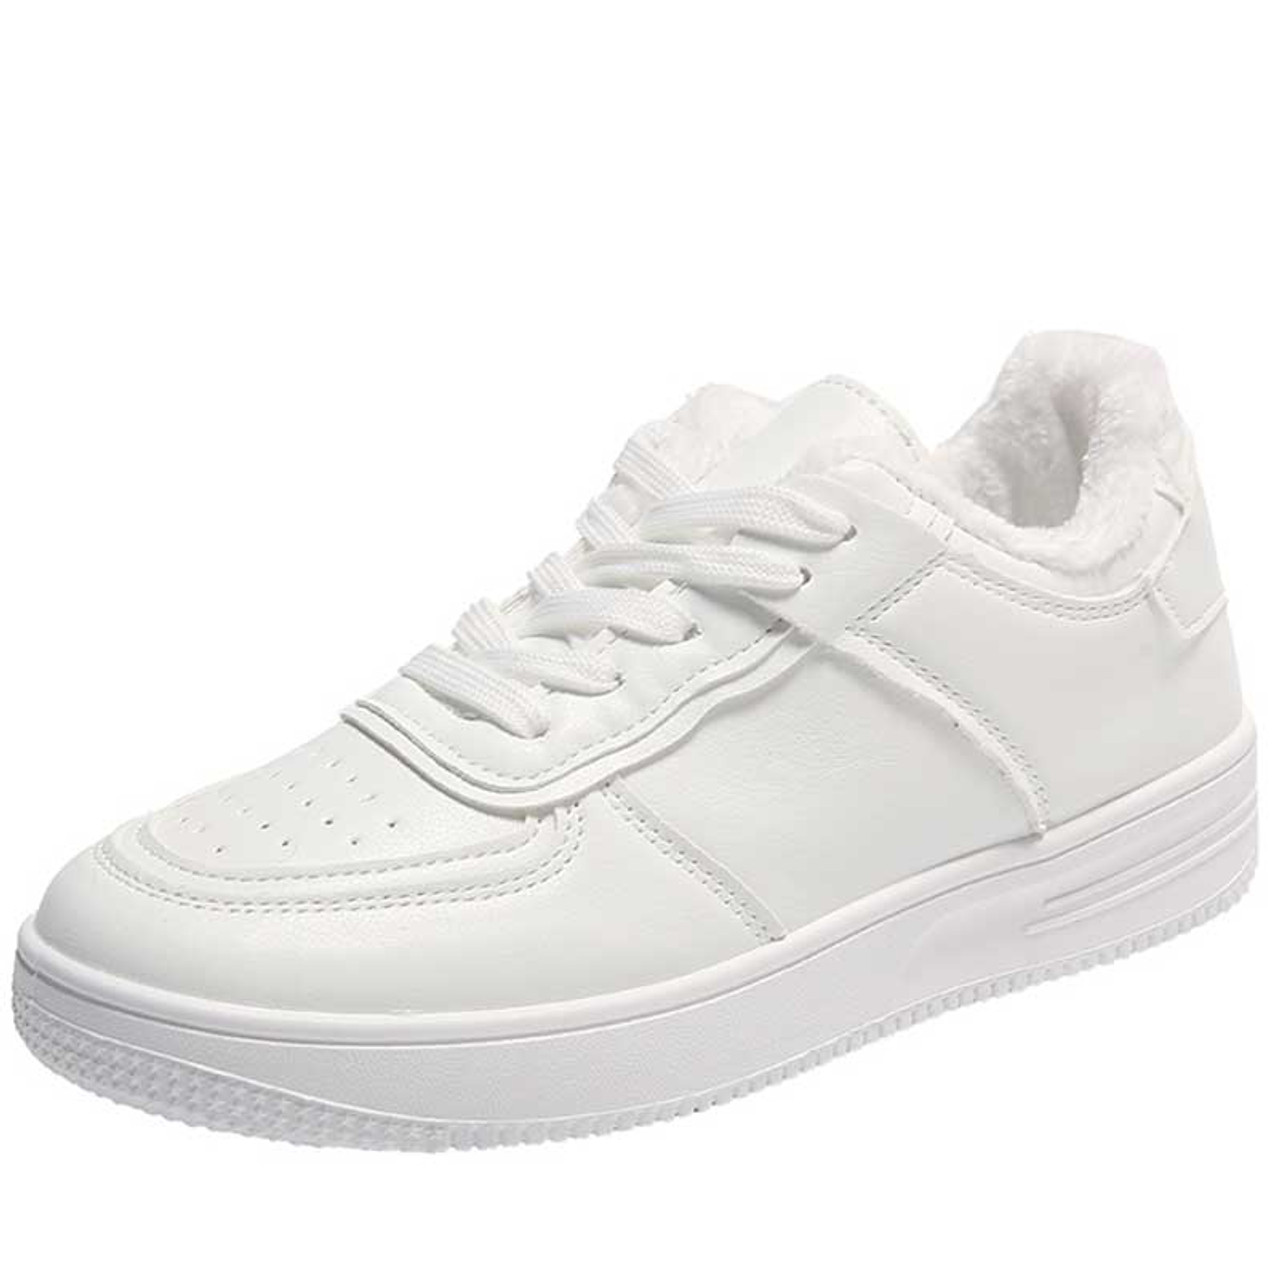 Buy Regal White Men Casual Sneakers Shoes Online at Regal Shoes |8208612